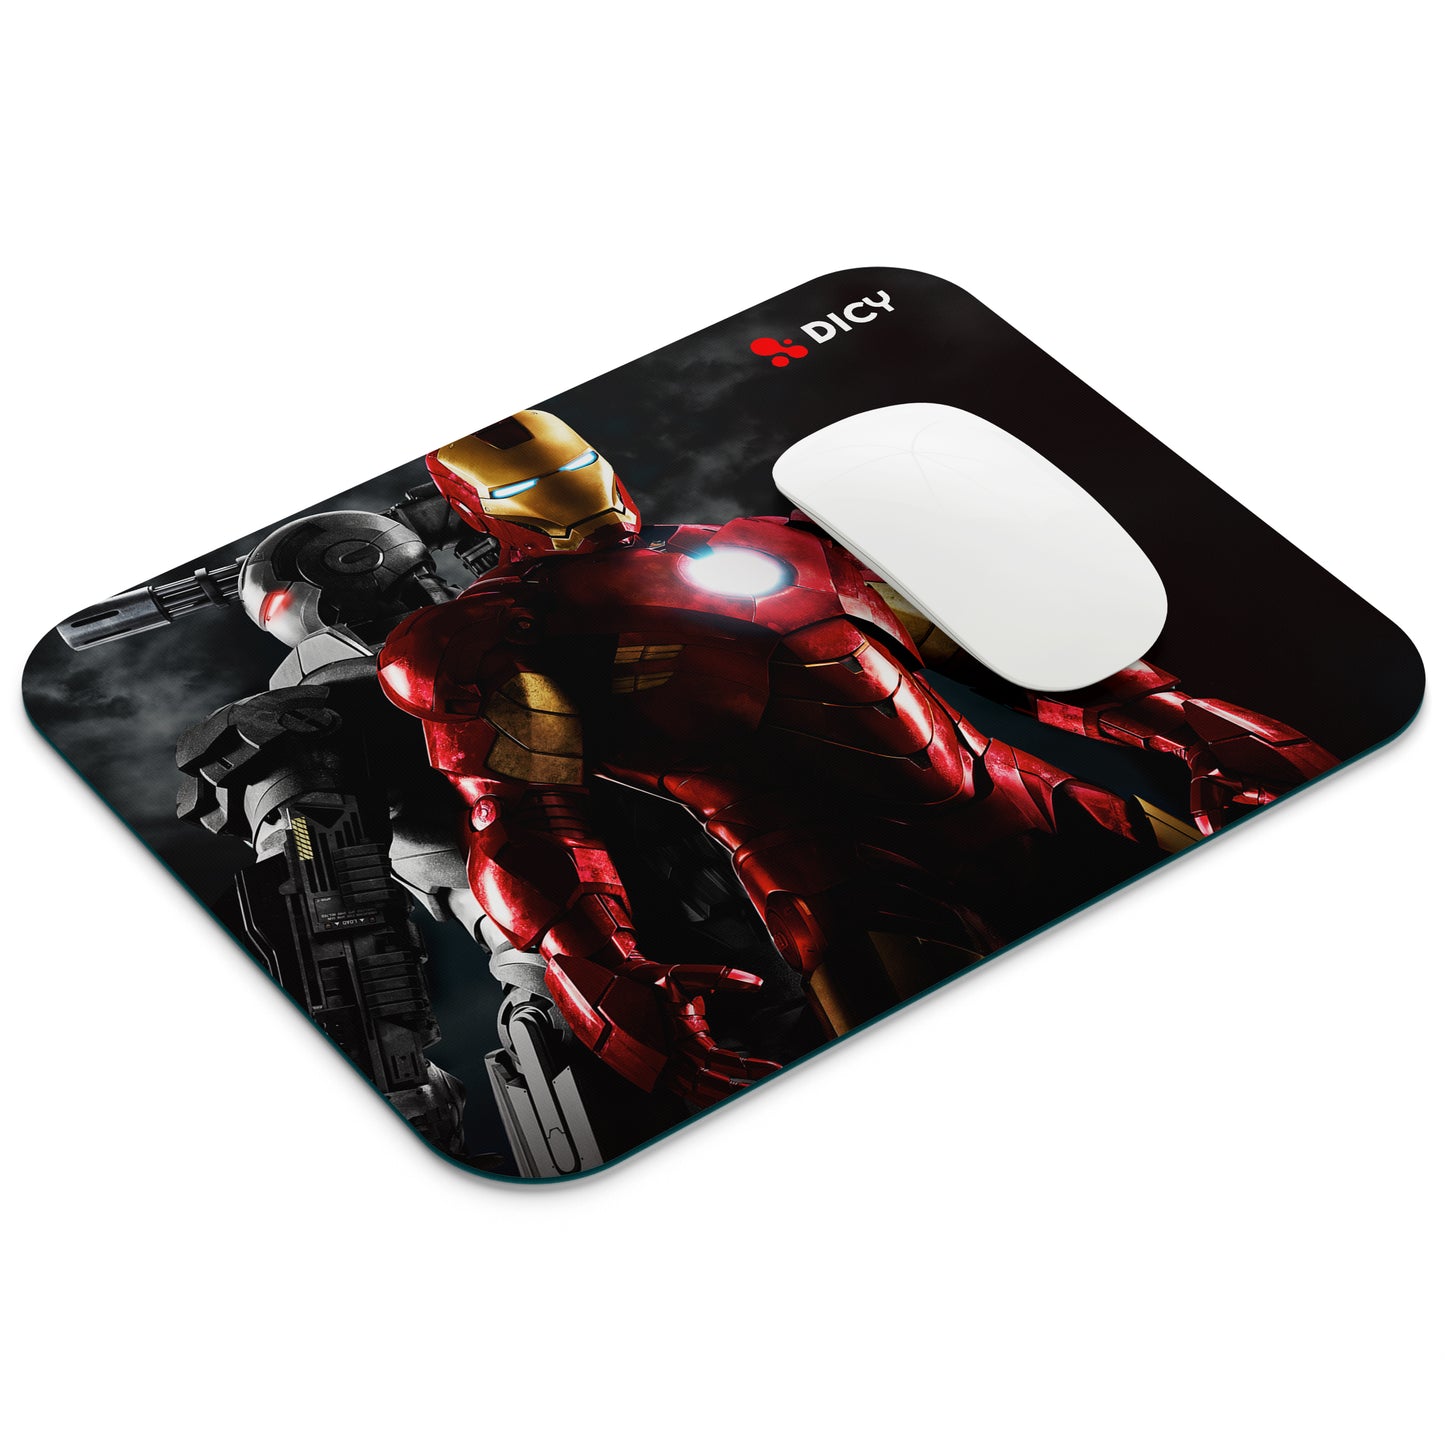 Mouse pad for Laptop Desktop PC | Iron man